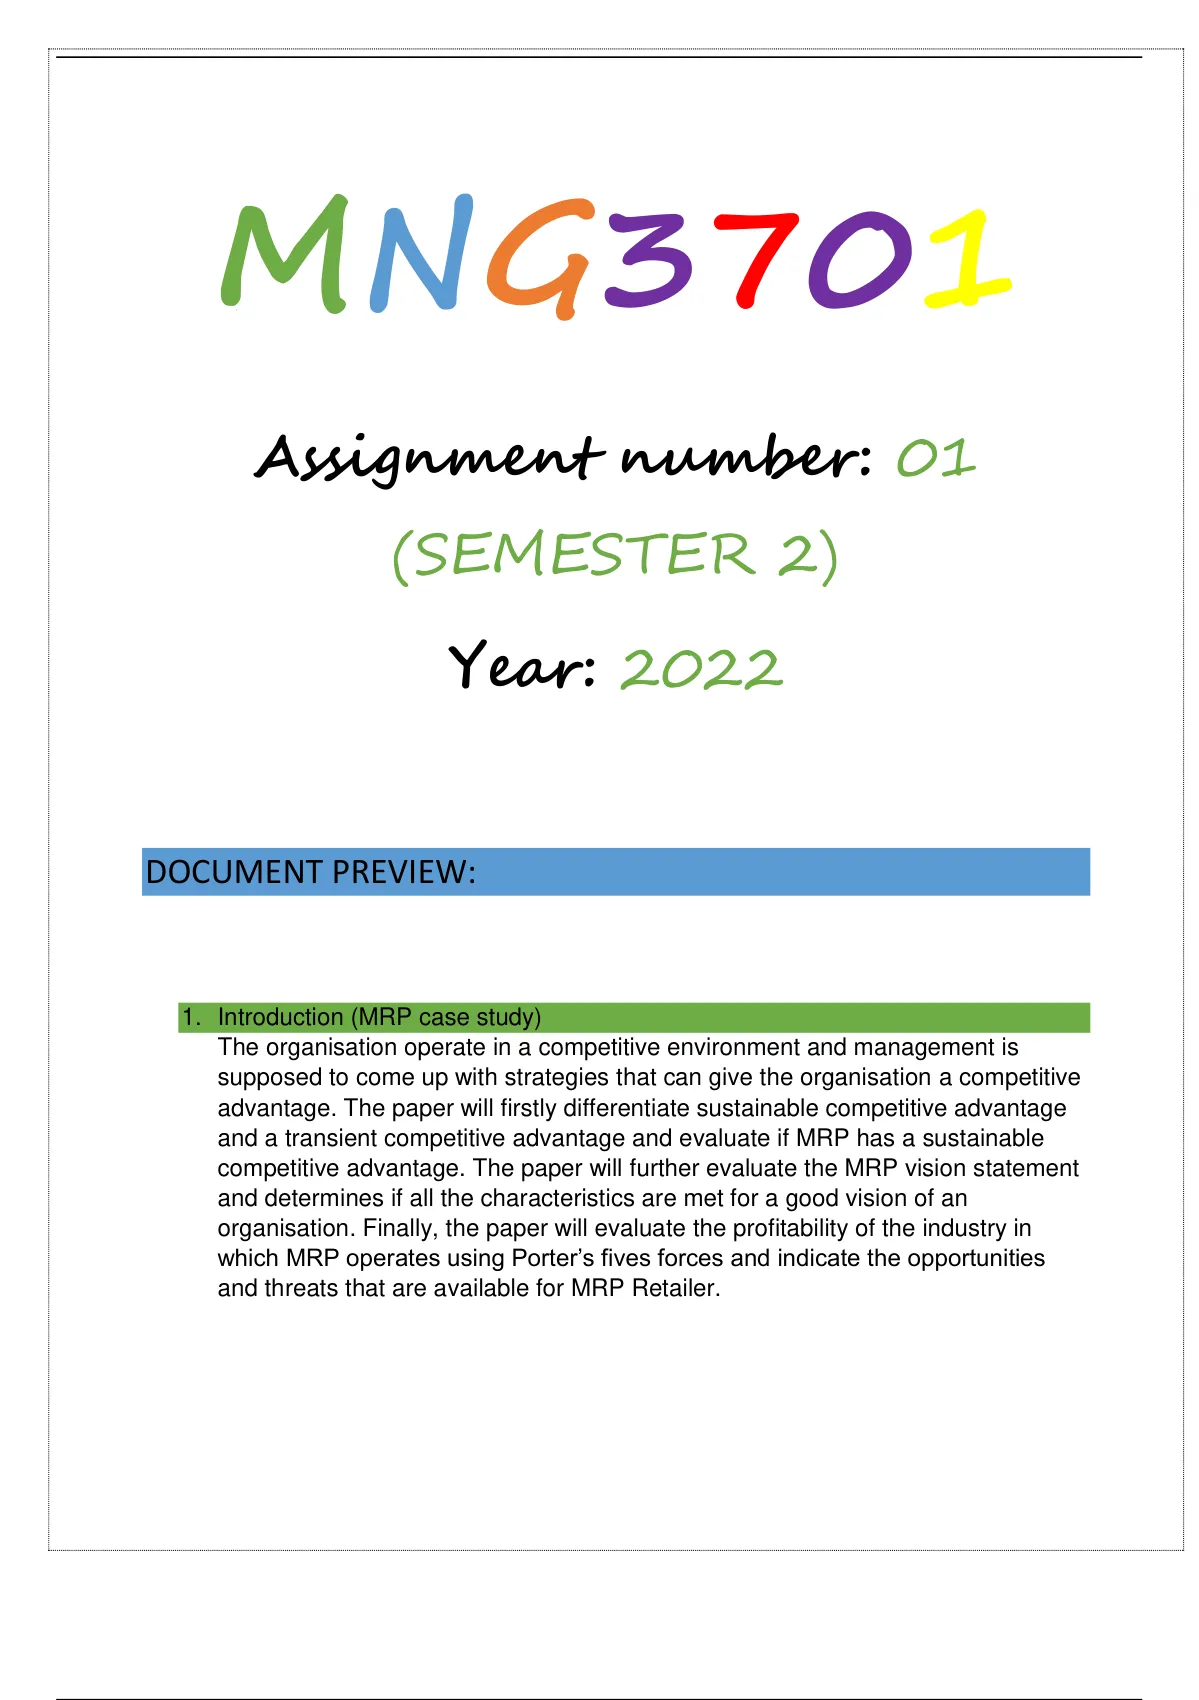 mng3701 assignment 2 semester 2 2022